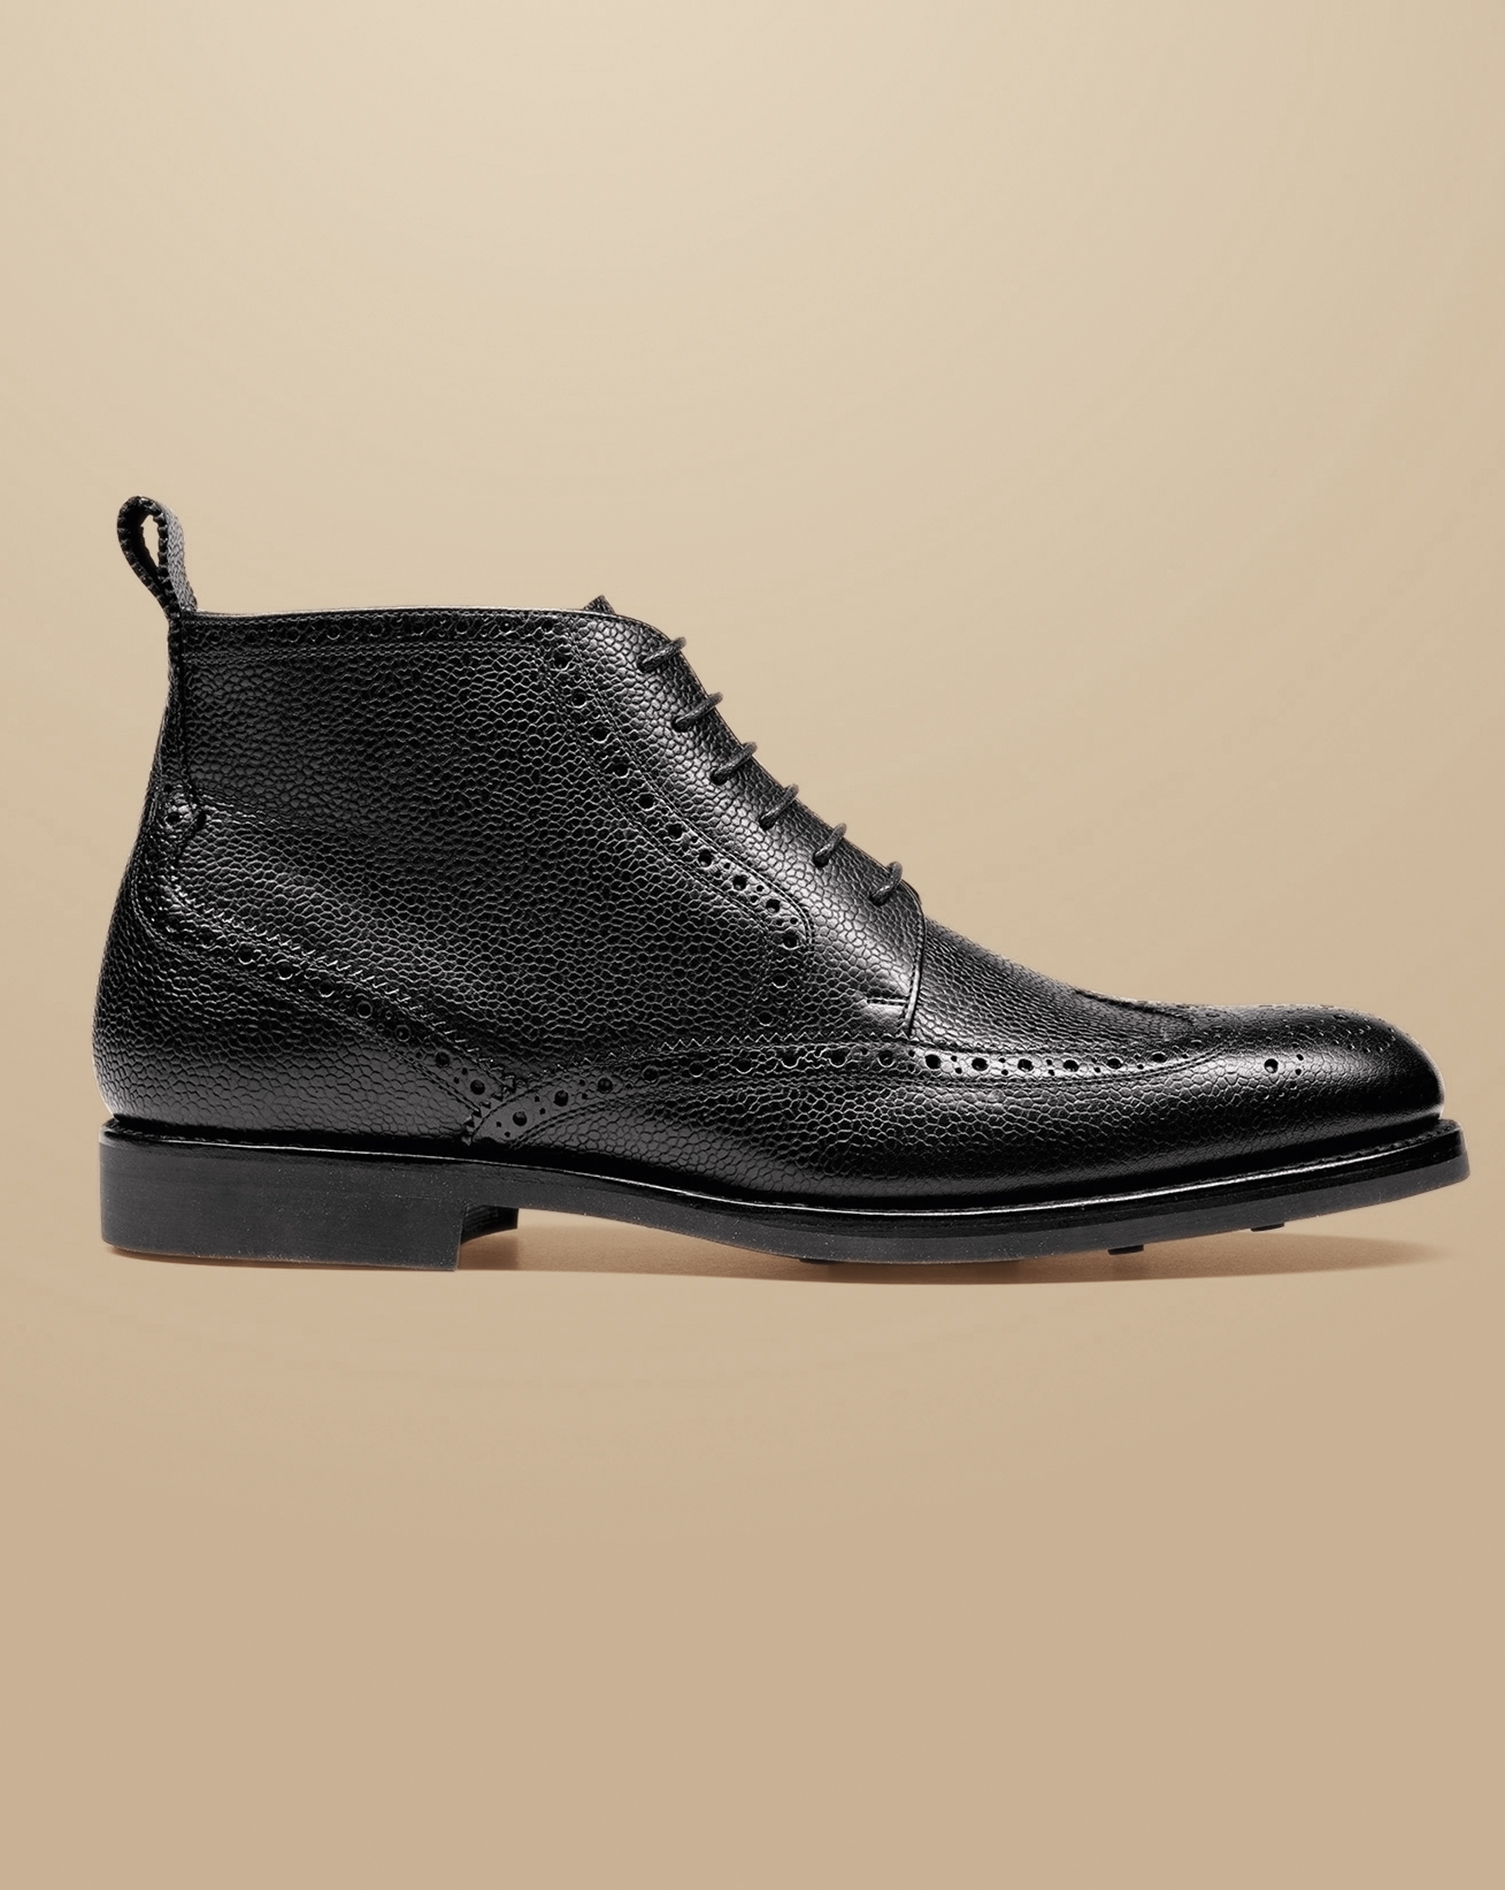 Men's Charles Tyrwhitt Brogue Boots - Black Size 8 Leather
